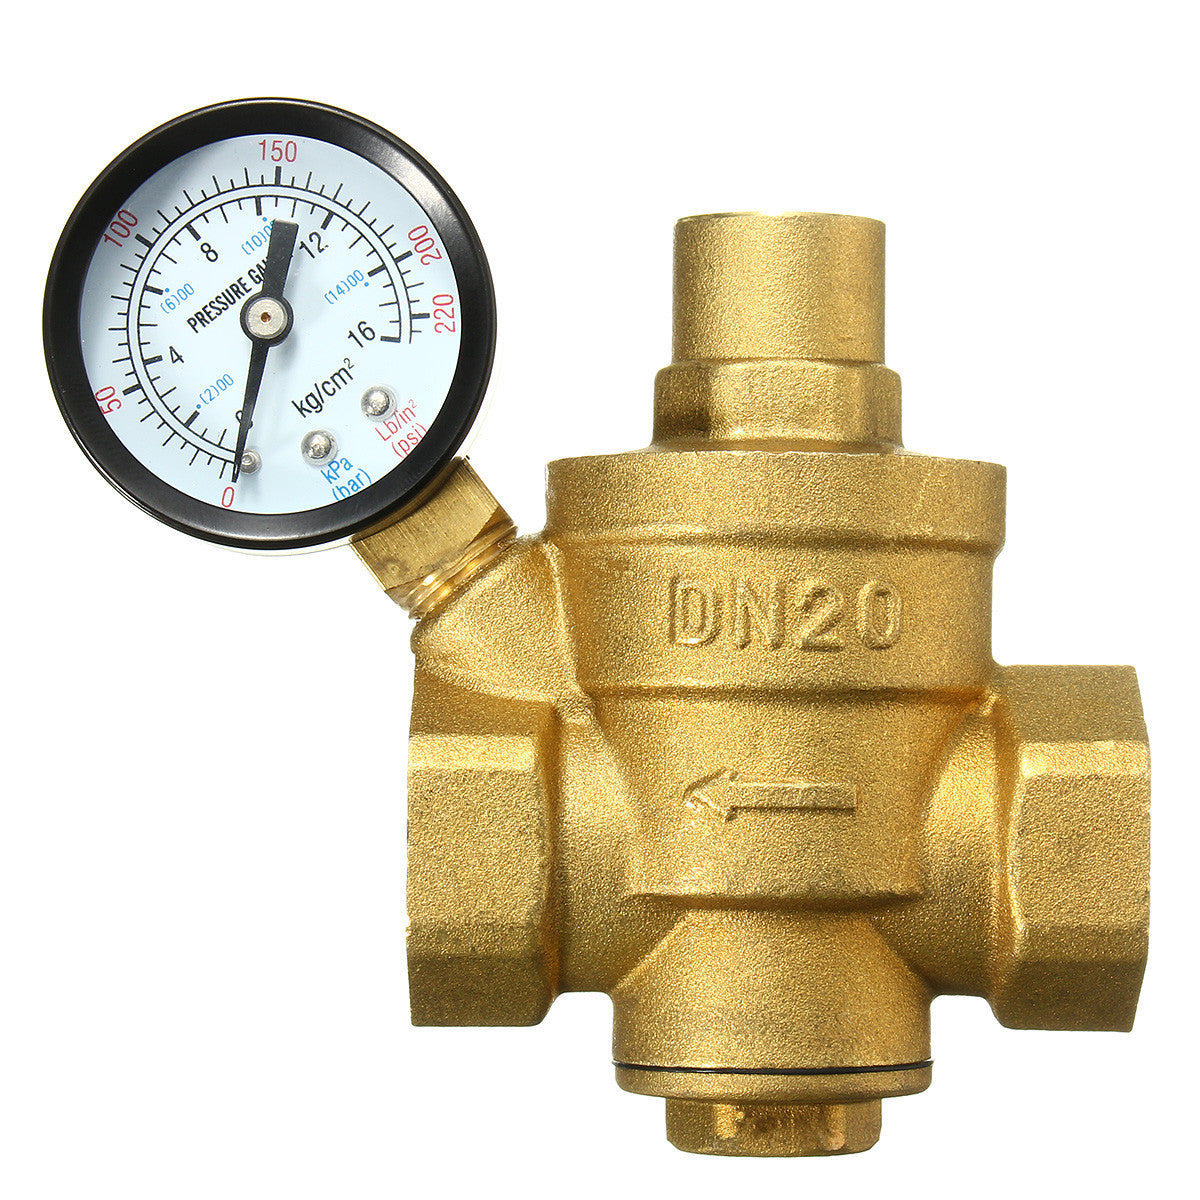 TMOK 1/2" 3/4" 1" Brass Adjustable Water Heater Pressure Reducing Valve with Gauge Meter Safety Relief Valve Pressure Regulator Controller